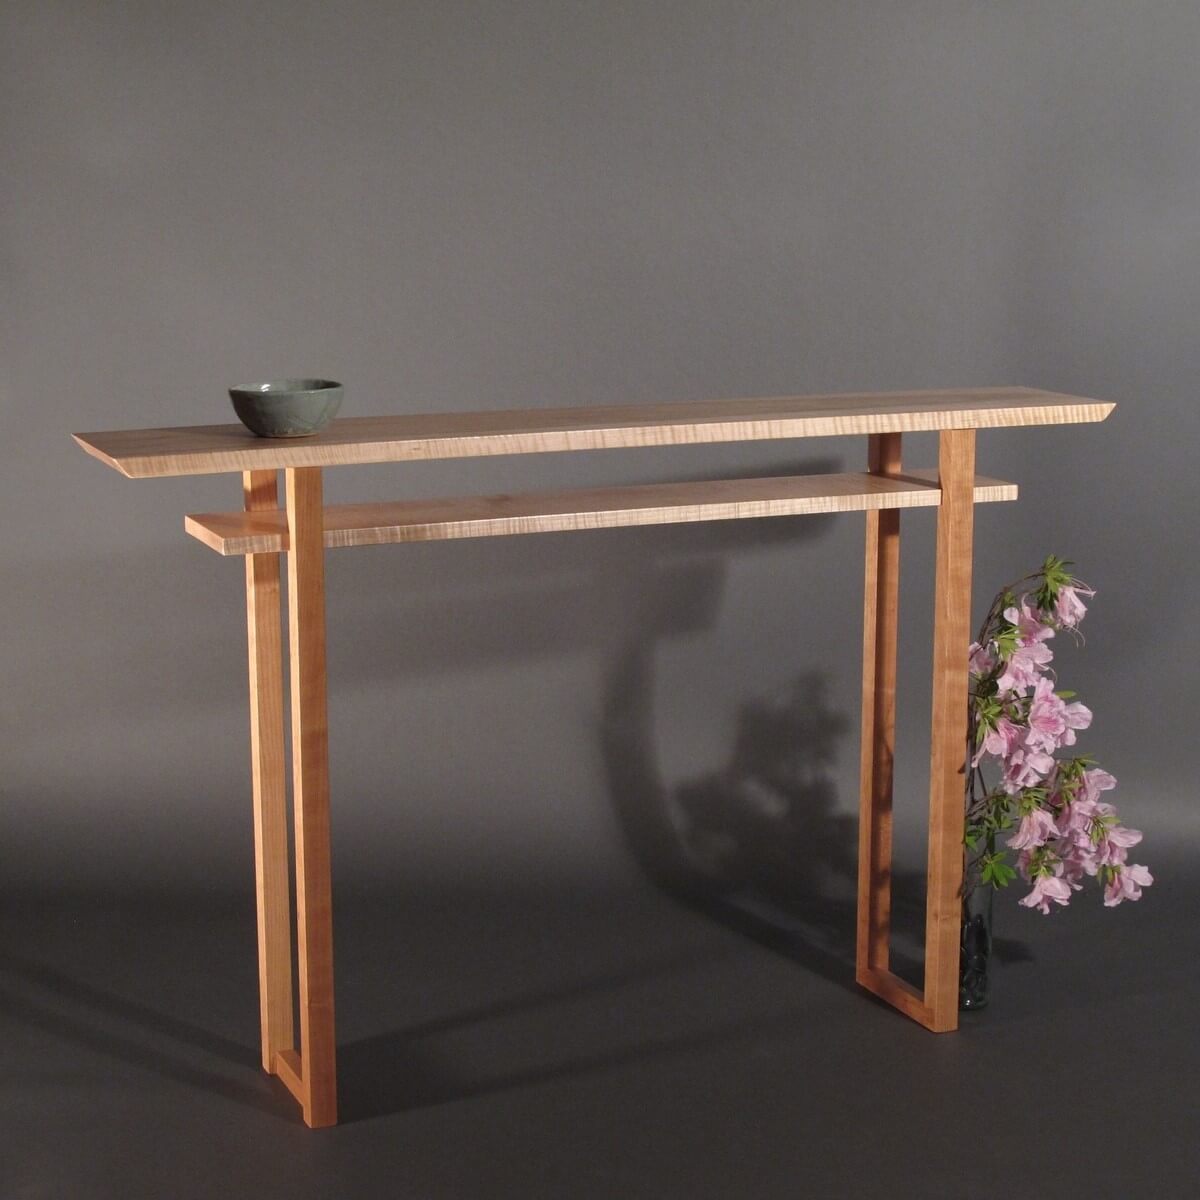 a minimalist hallway console table with shelf by Mokuzai Furniture